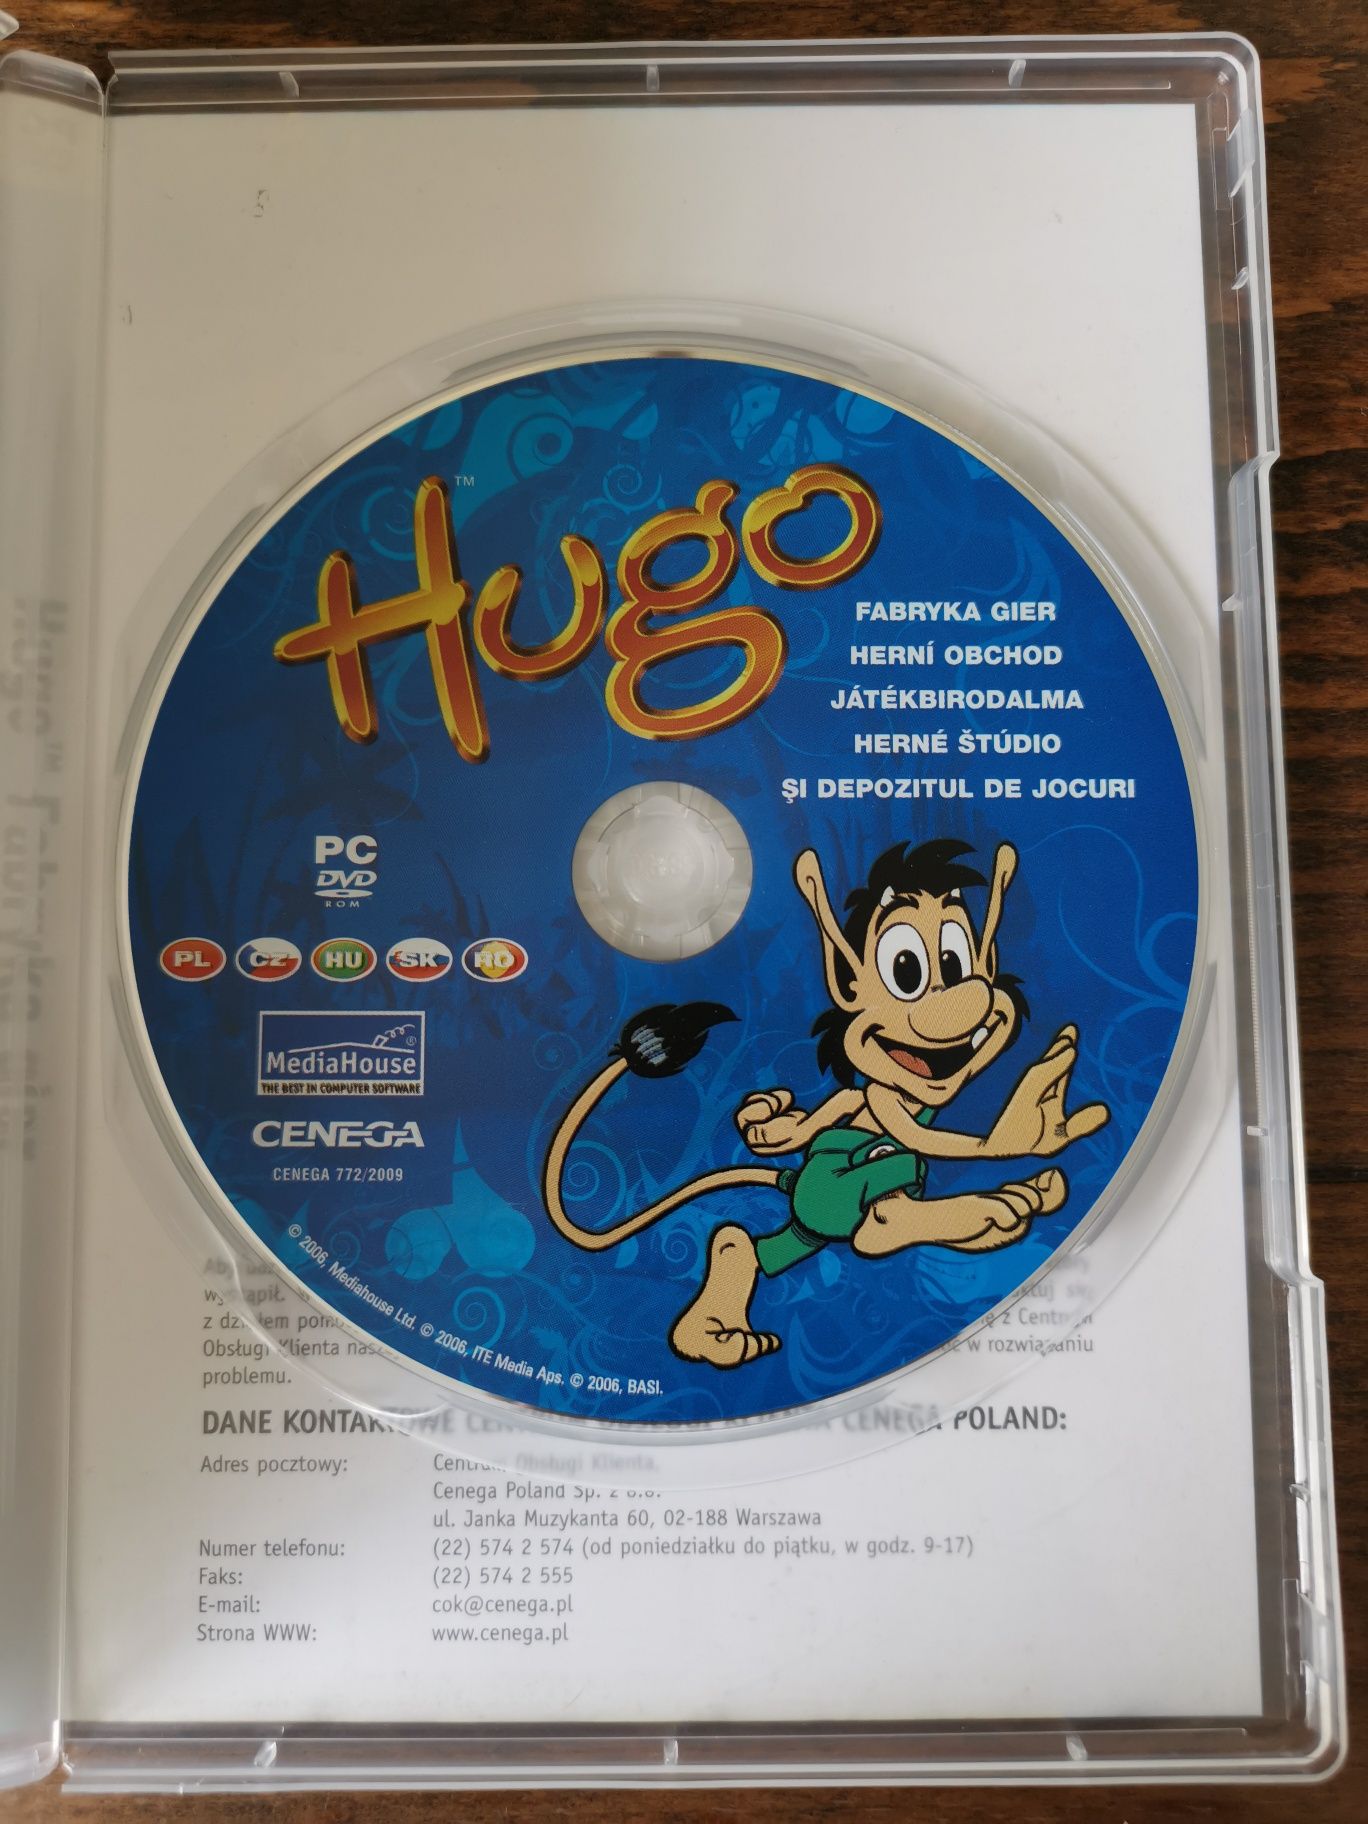 Hugo fabryka gier, gra na PC